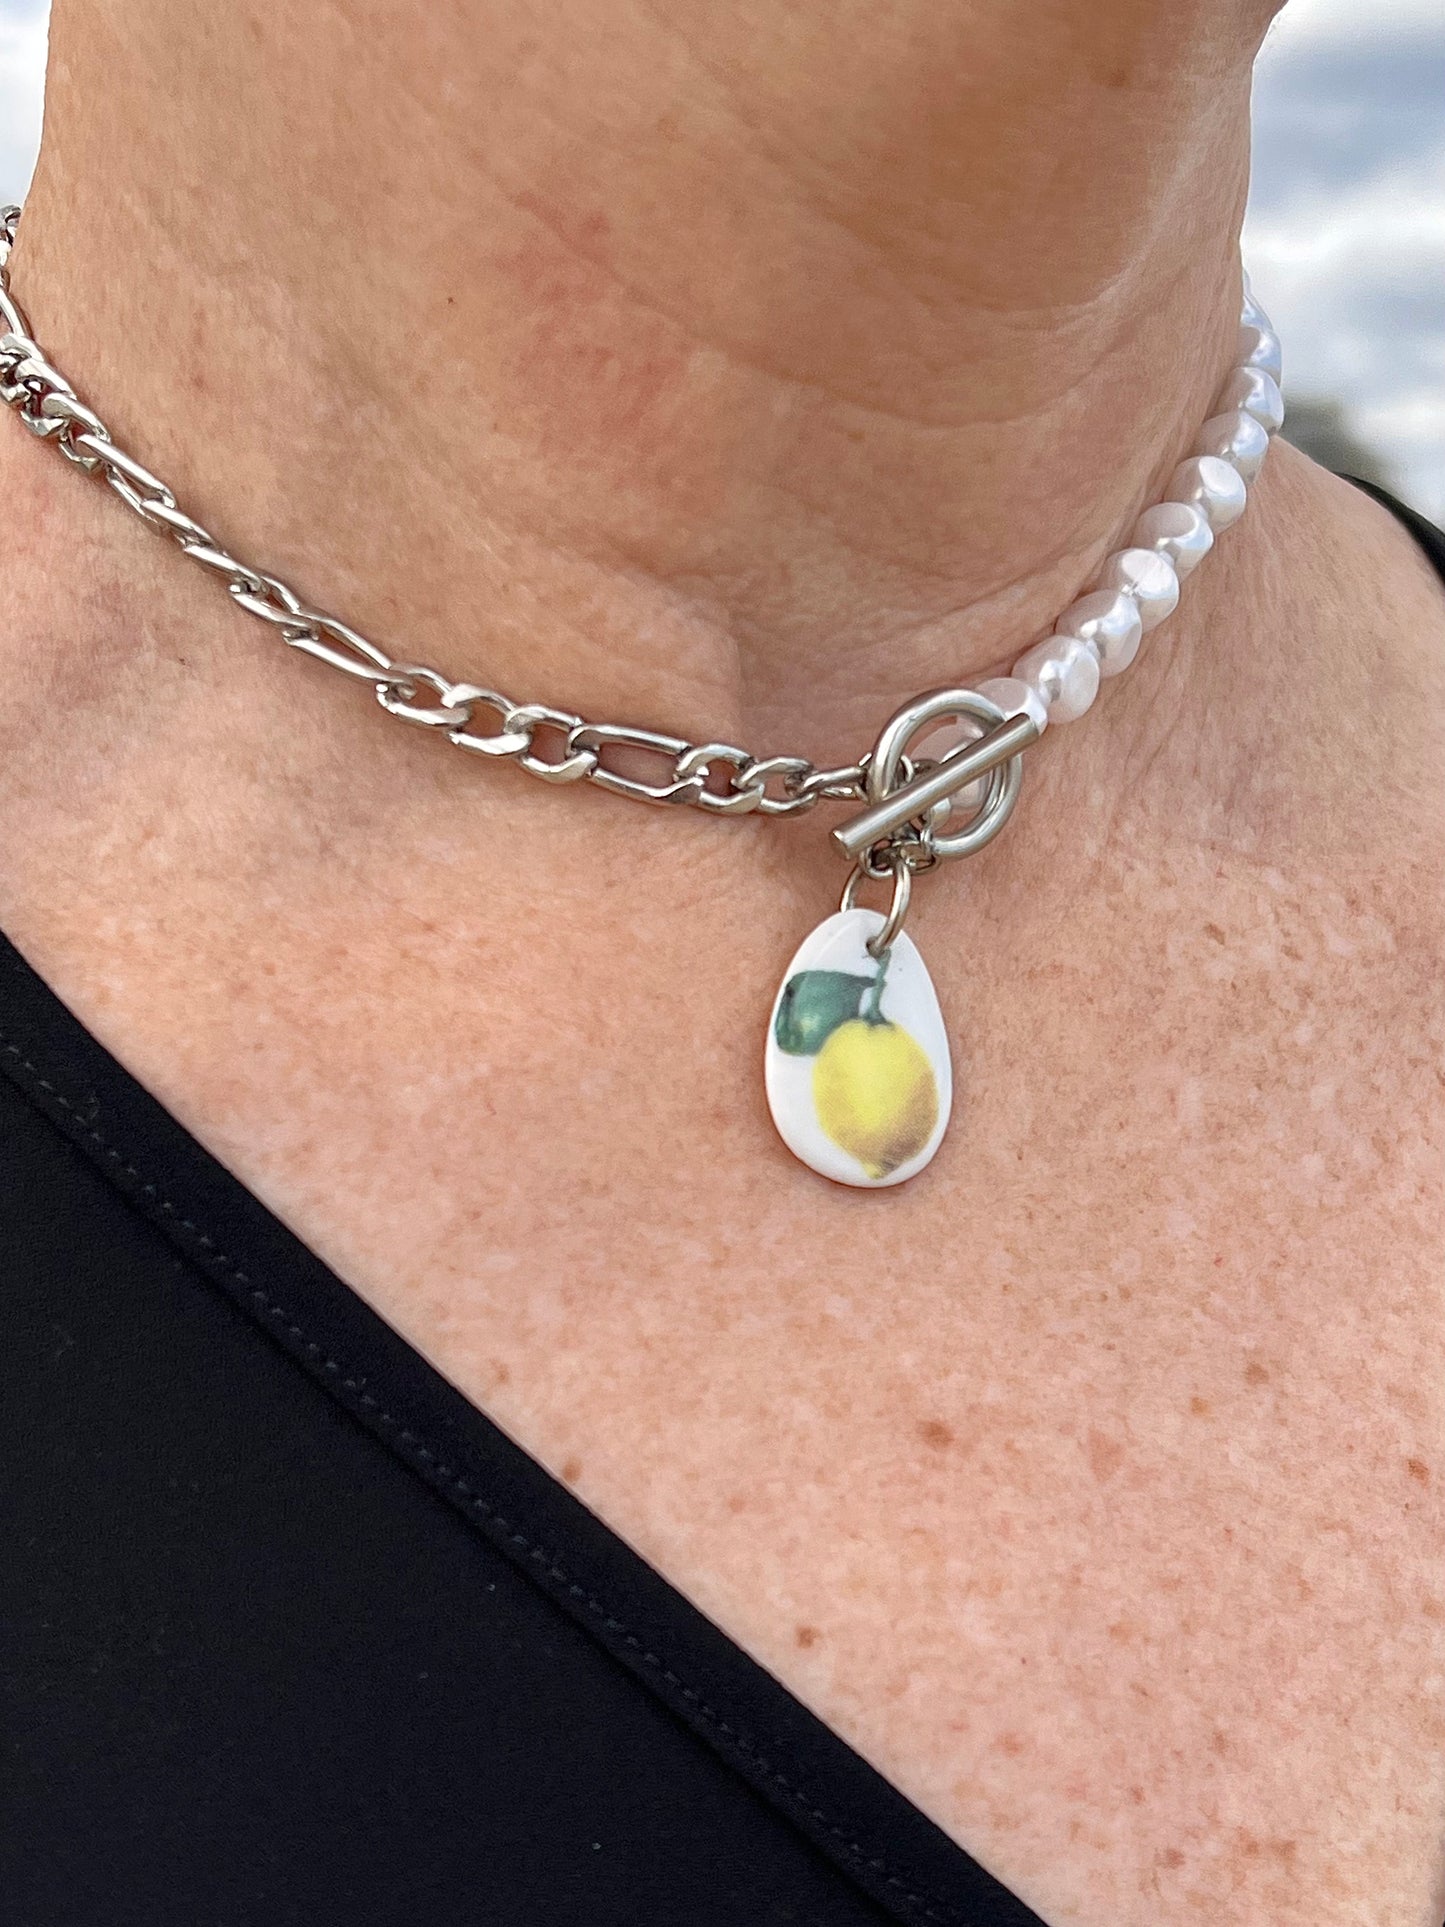 Choker Necklace Lemon jewelry fruit necklace fruit jewelry